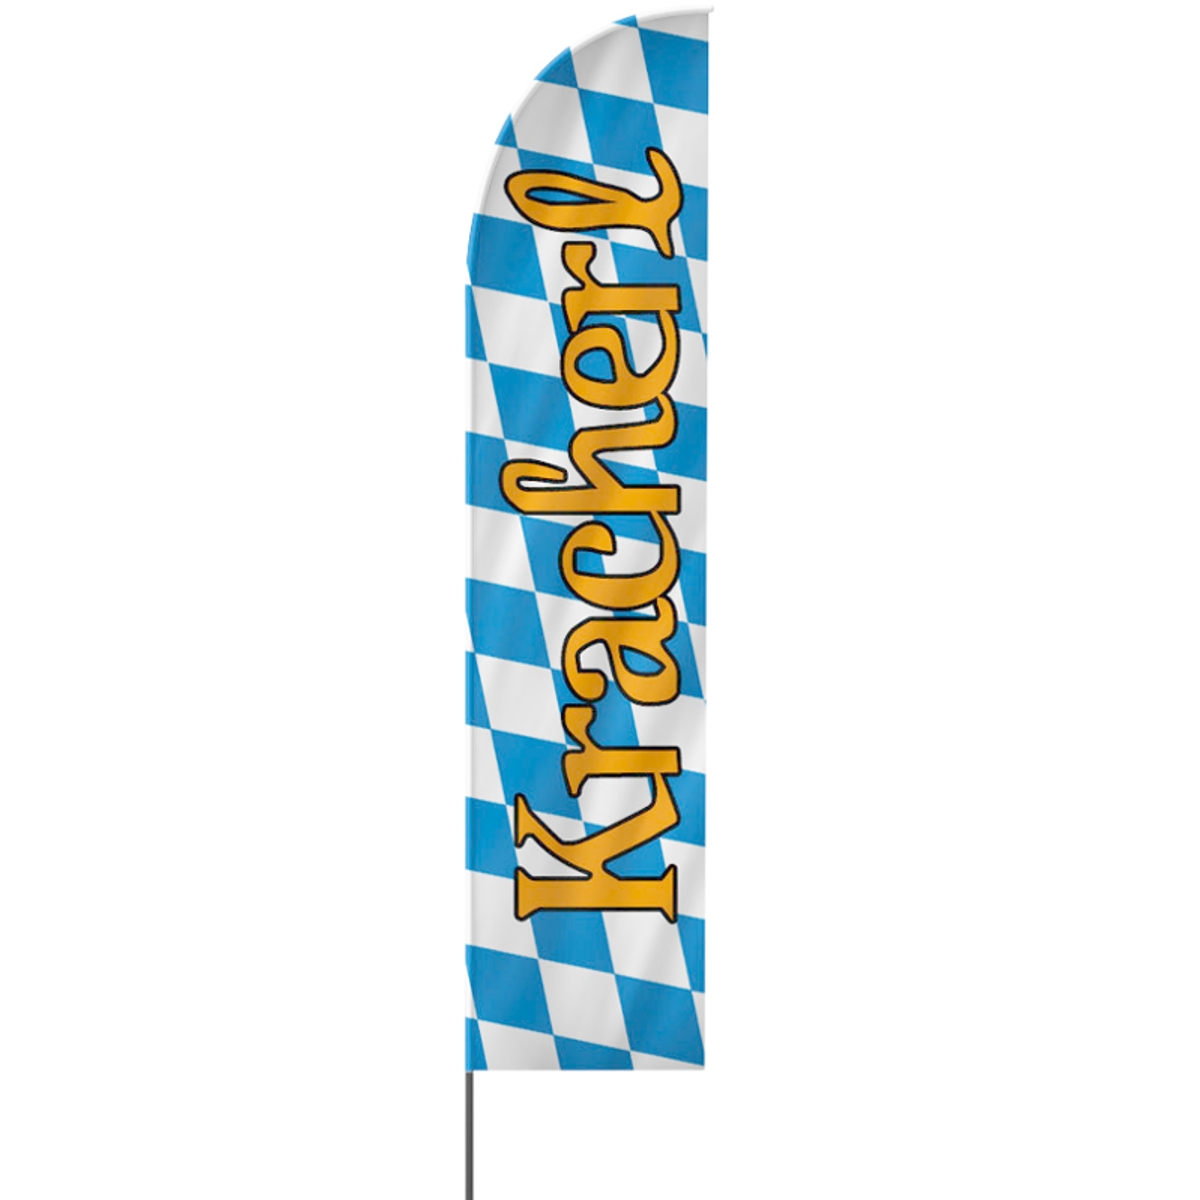 Straight | Kracherl, Oktoberfest Beachflag, blau weiß, verschiedene Größen, V1